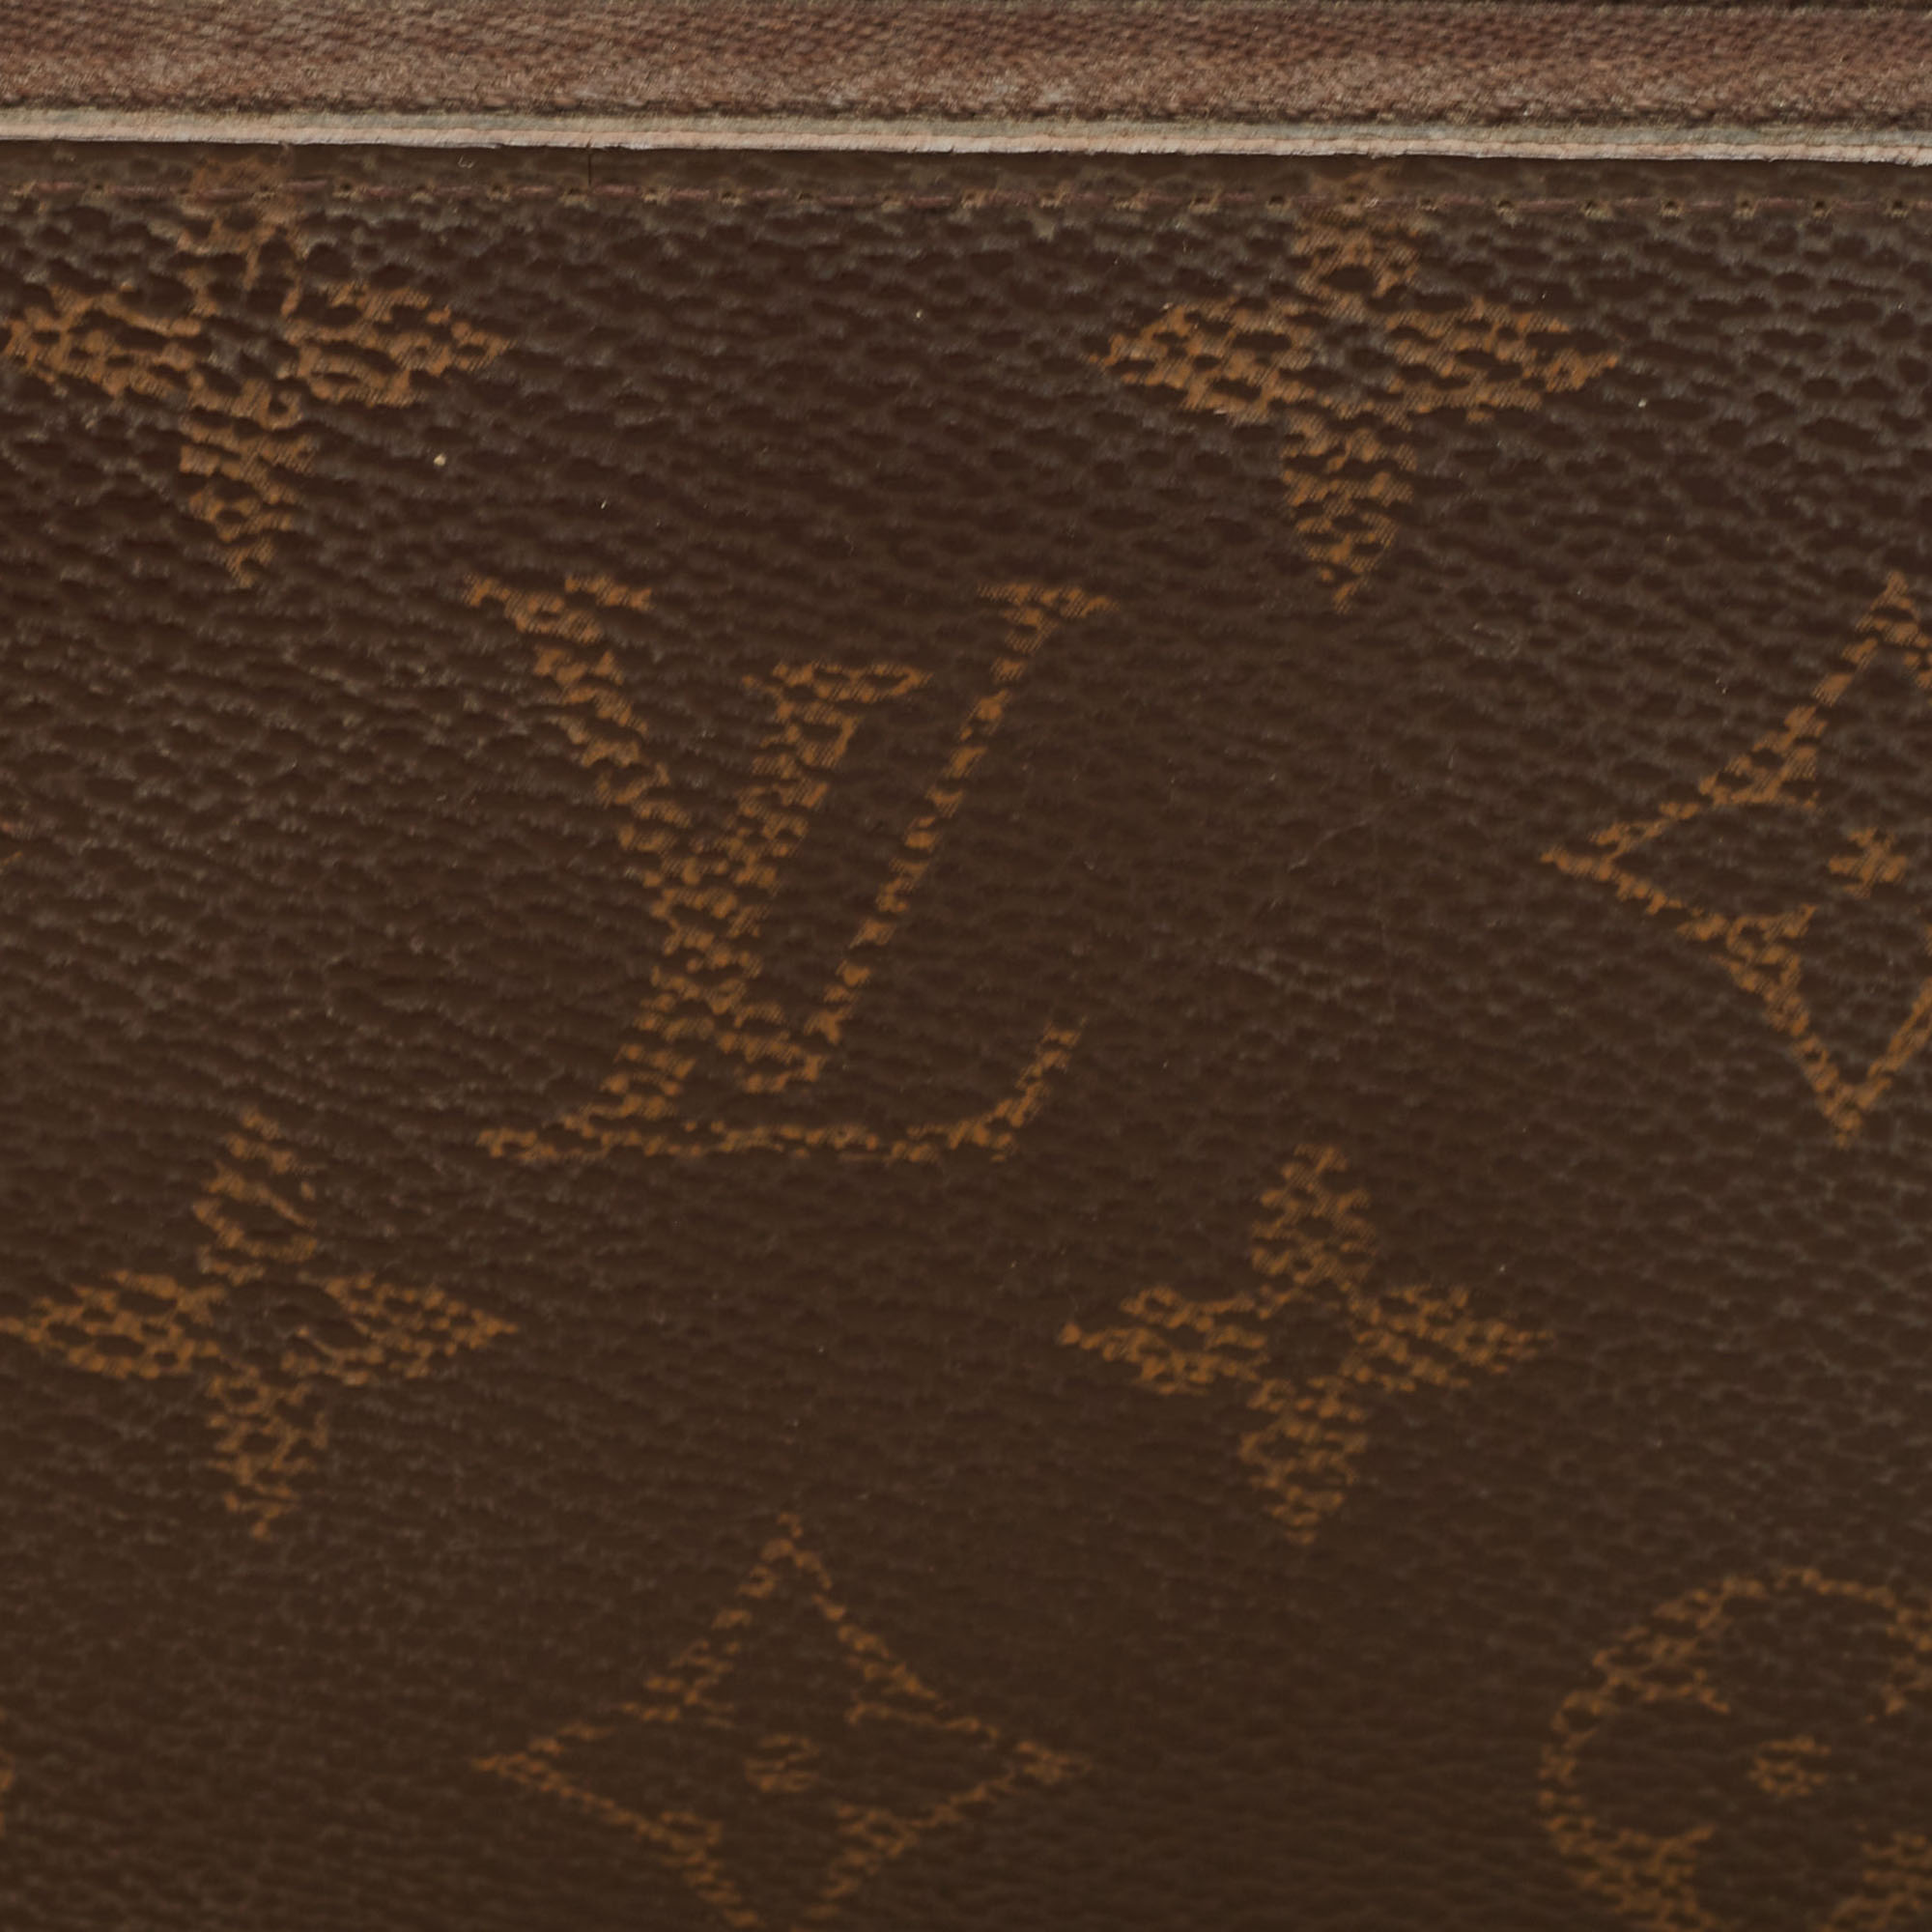 Louis Vuitton Monogram Canvas Zippy Wallet